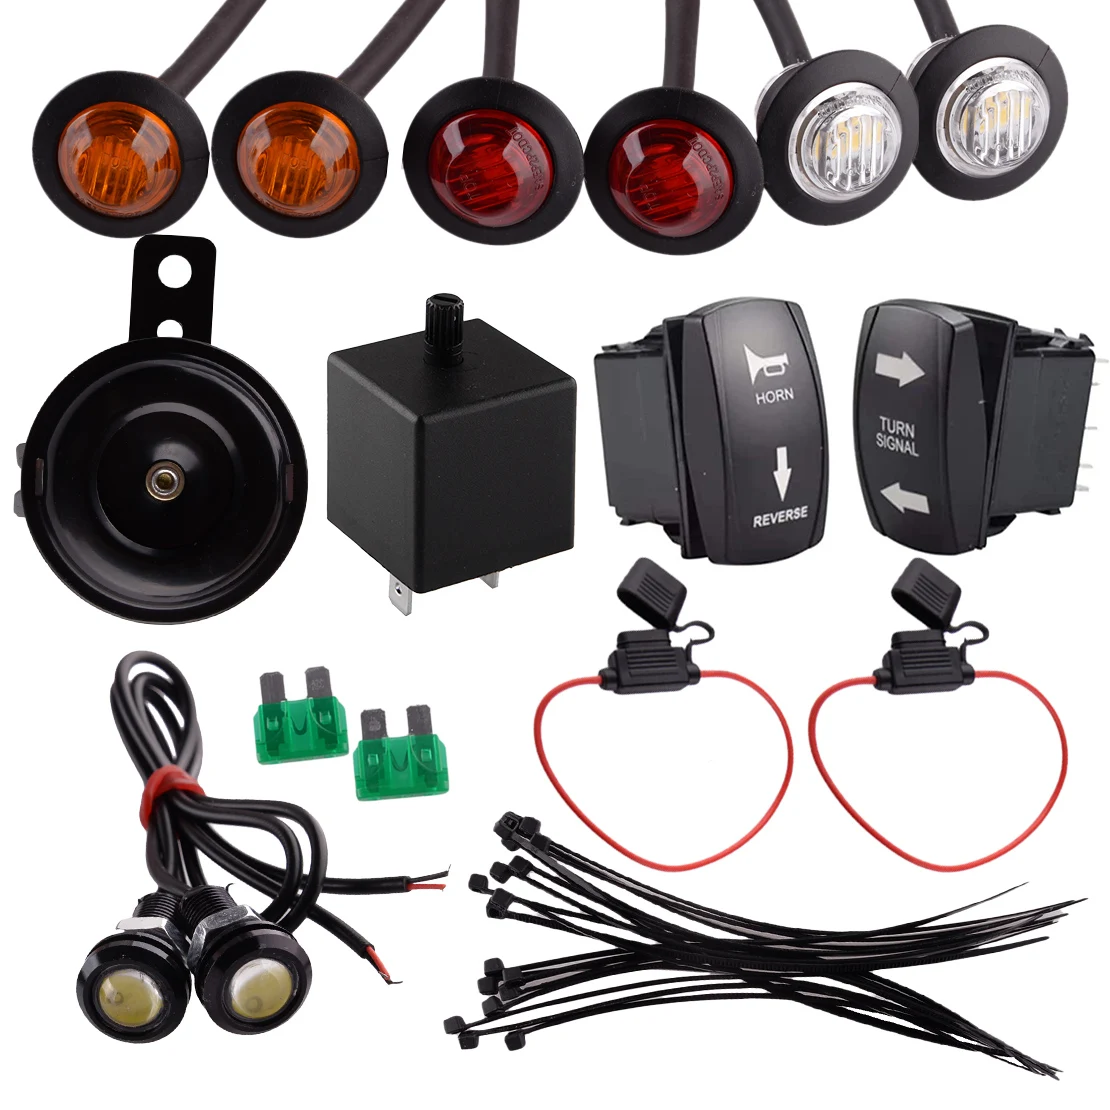 Turn Signal Horn Reverse Rocker Switch LED Light Kit Fit for Honda Golf Cart Polaris Kawasaki Yamaha ATV UTV Arctic Cat Can-Am